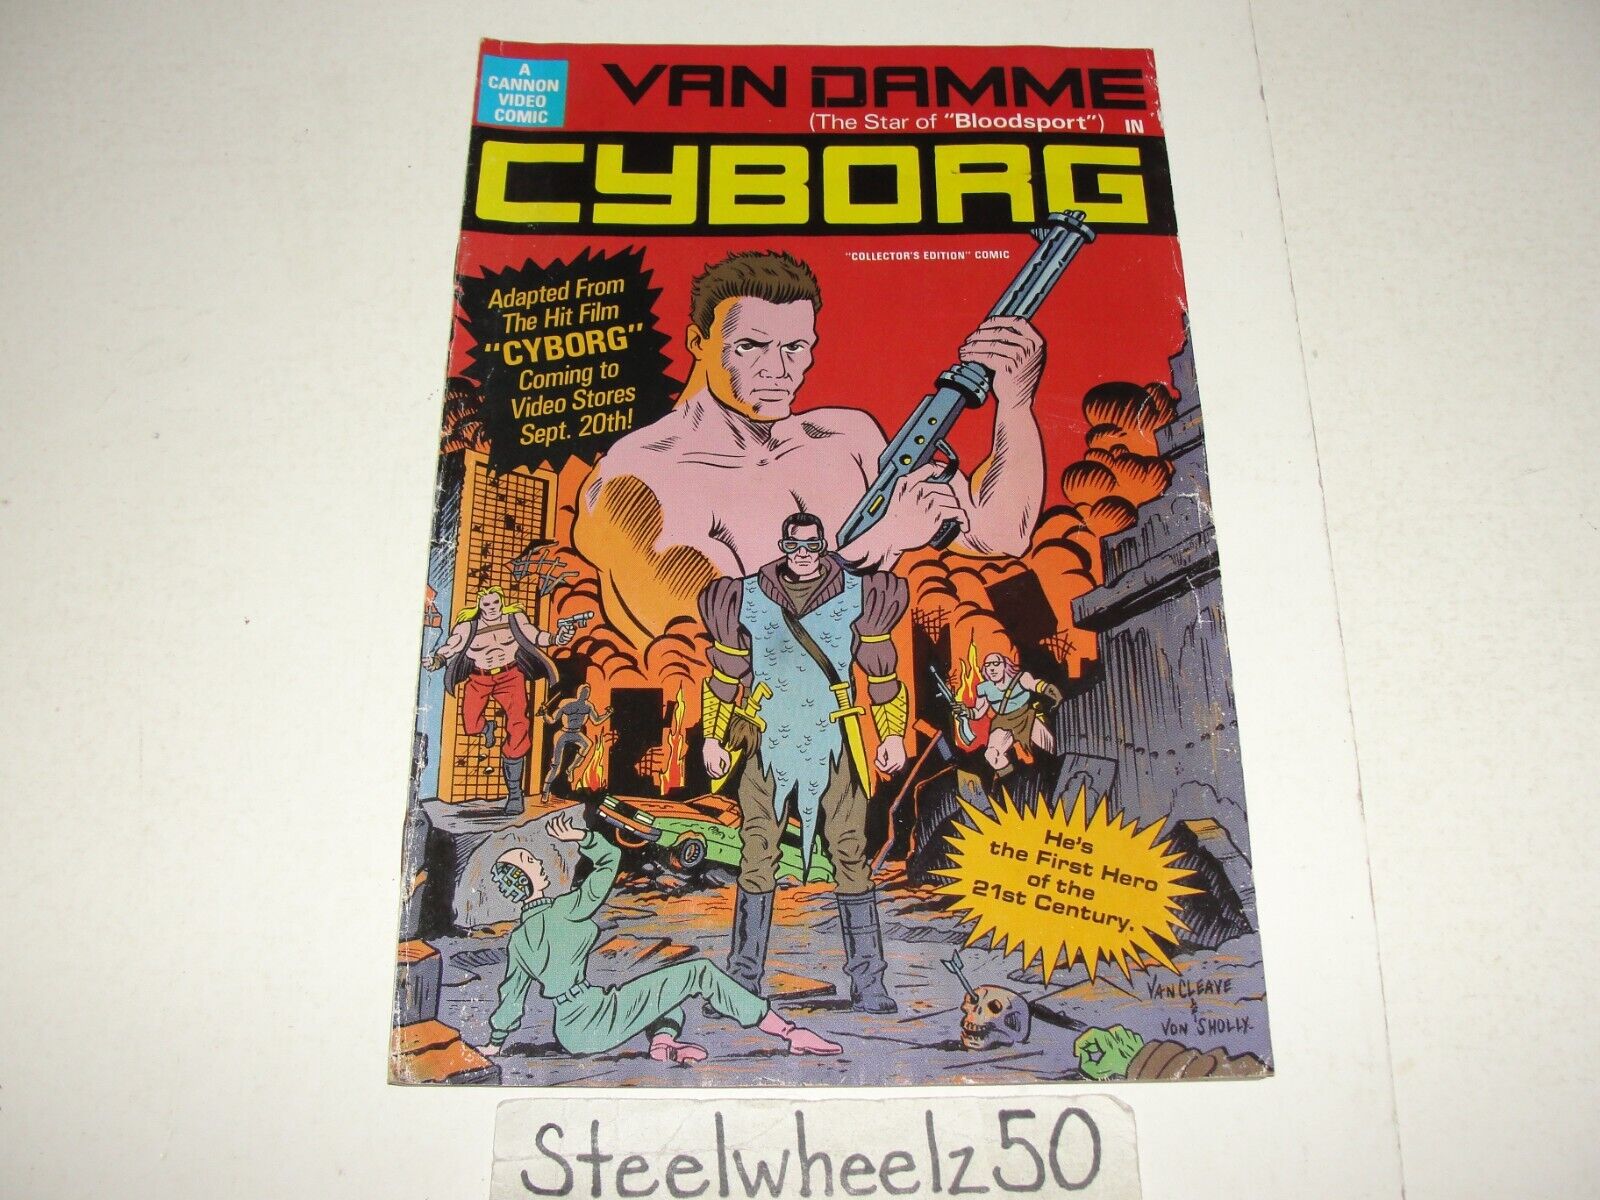 Cyborg #1 Comic 1989 Cannon Video Jean Claude Van Damme Movie Promo Adaptation